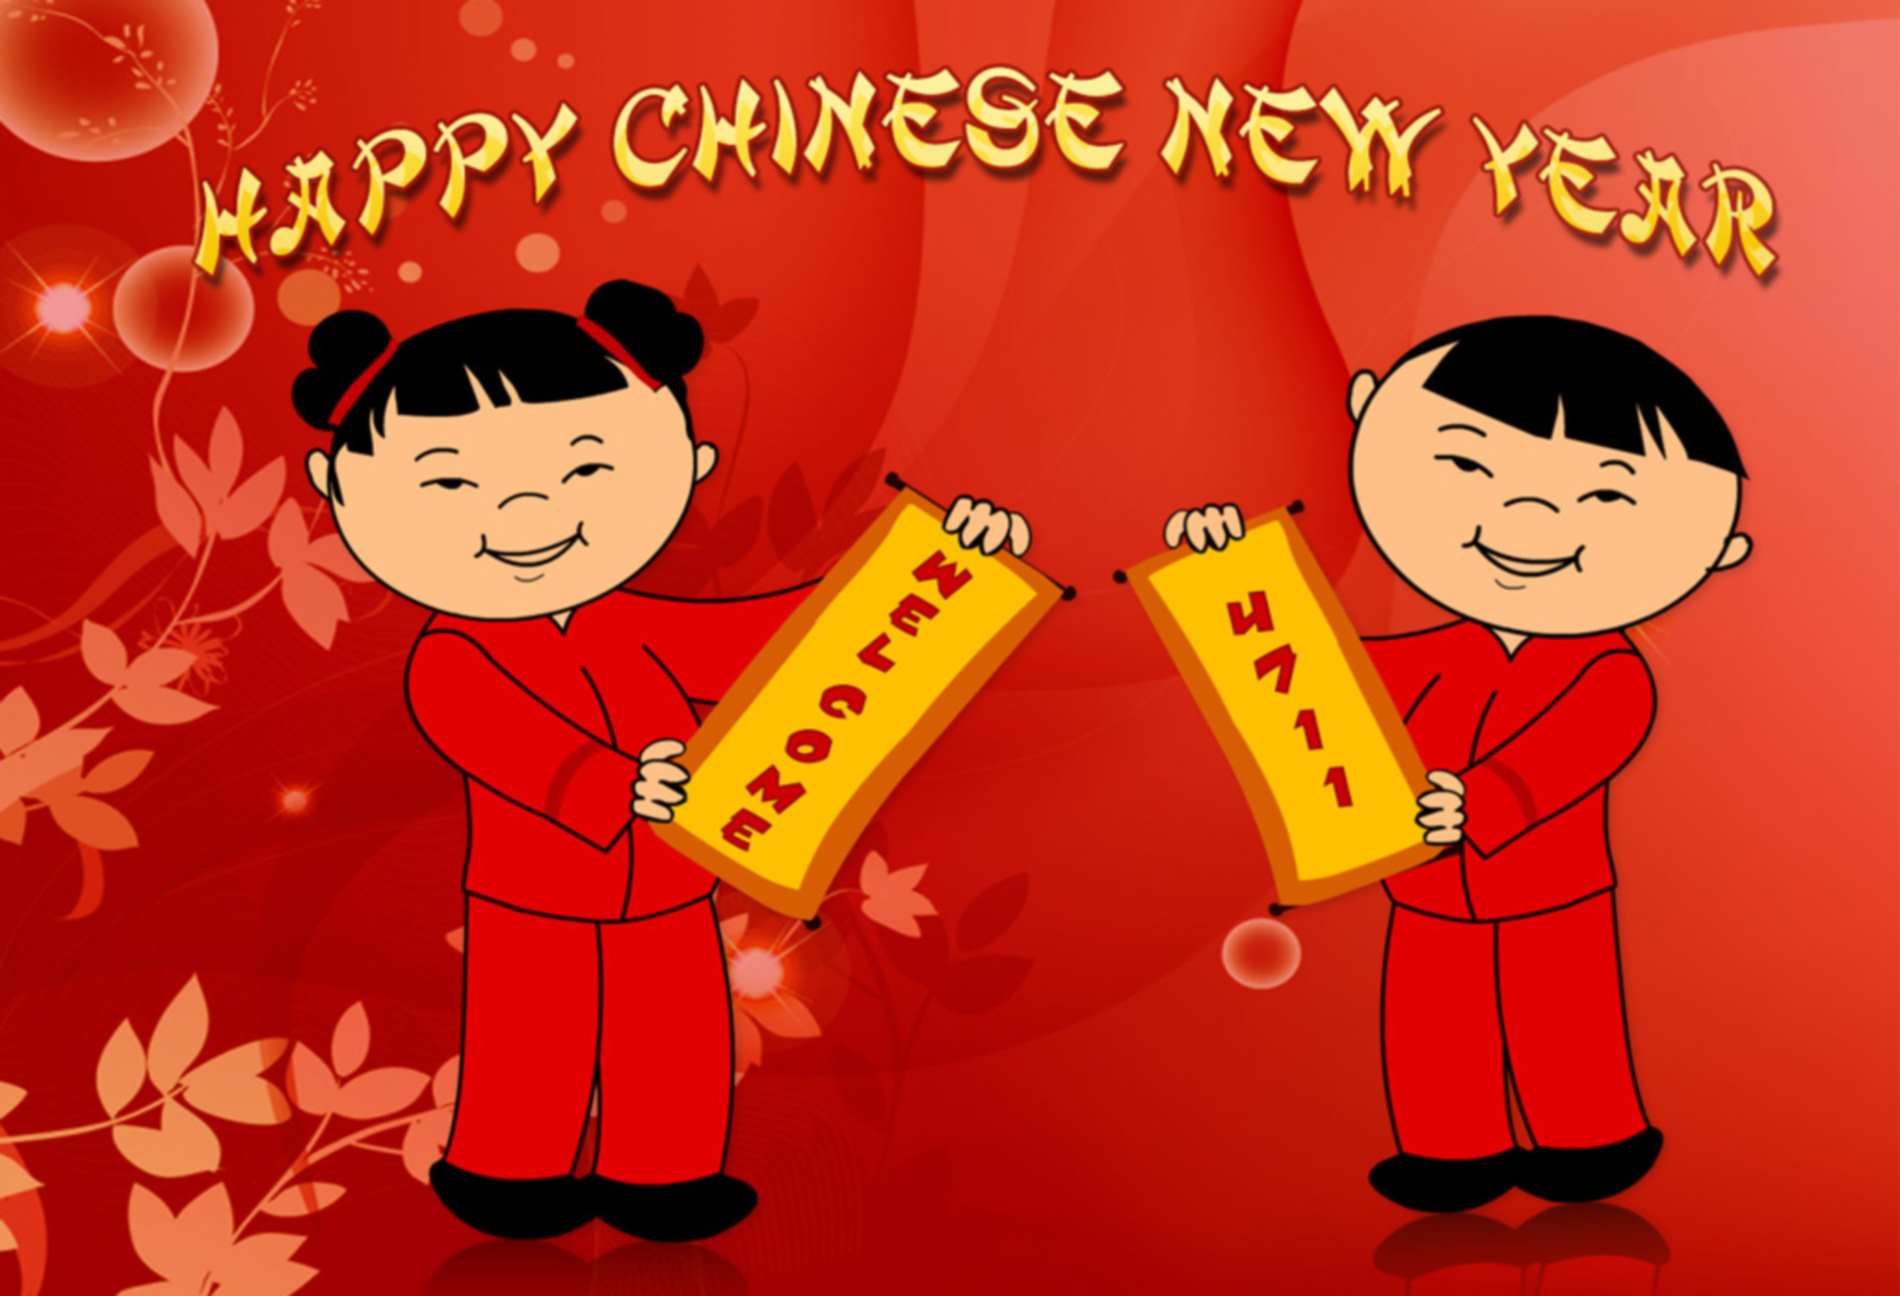 clipart chinese new year 2015 - photo #39